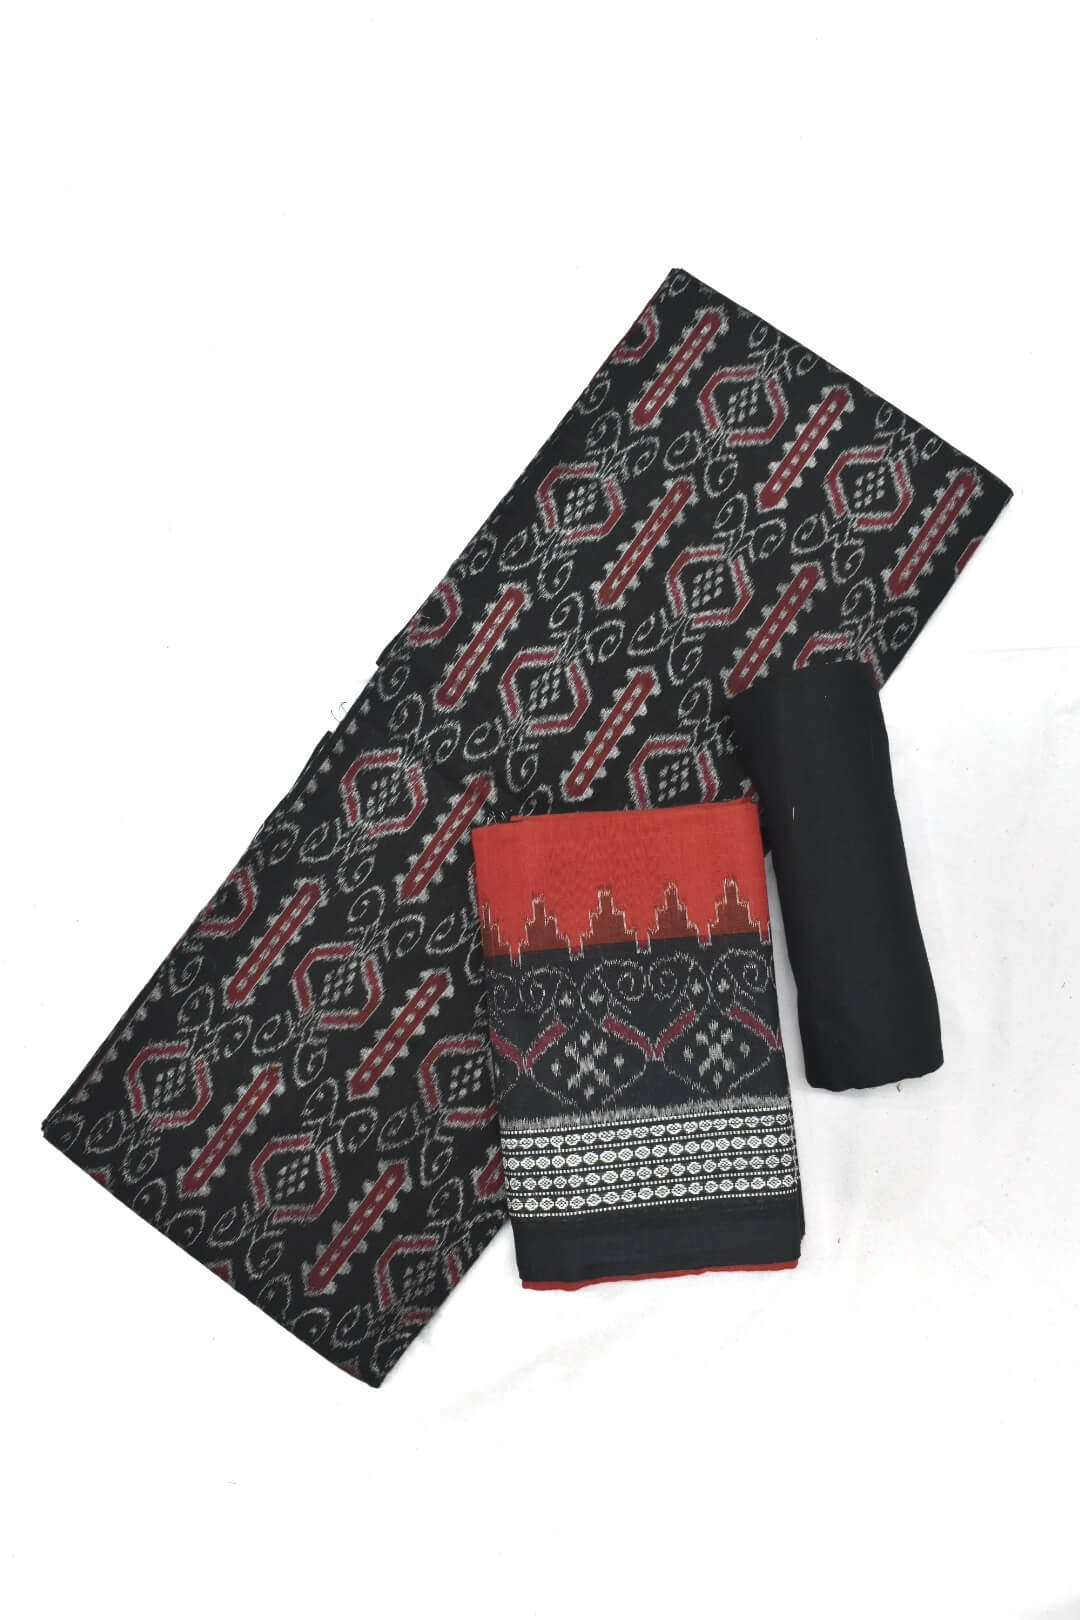 Pasapalli and bandha Double ikat sambalpuri dress material Red, Black(3  Piece) - Swadeshi Dhaaga | स्वदेशी धागा